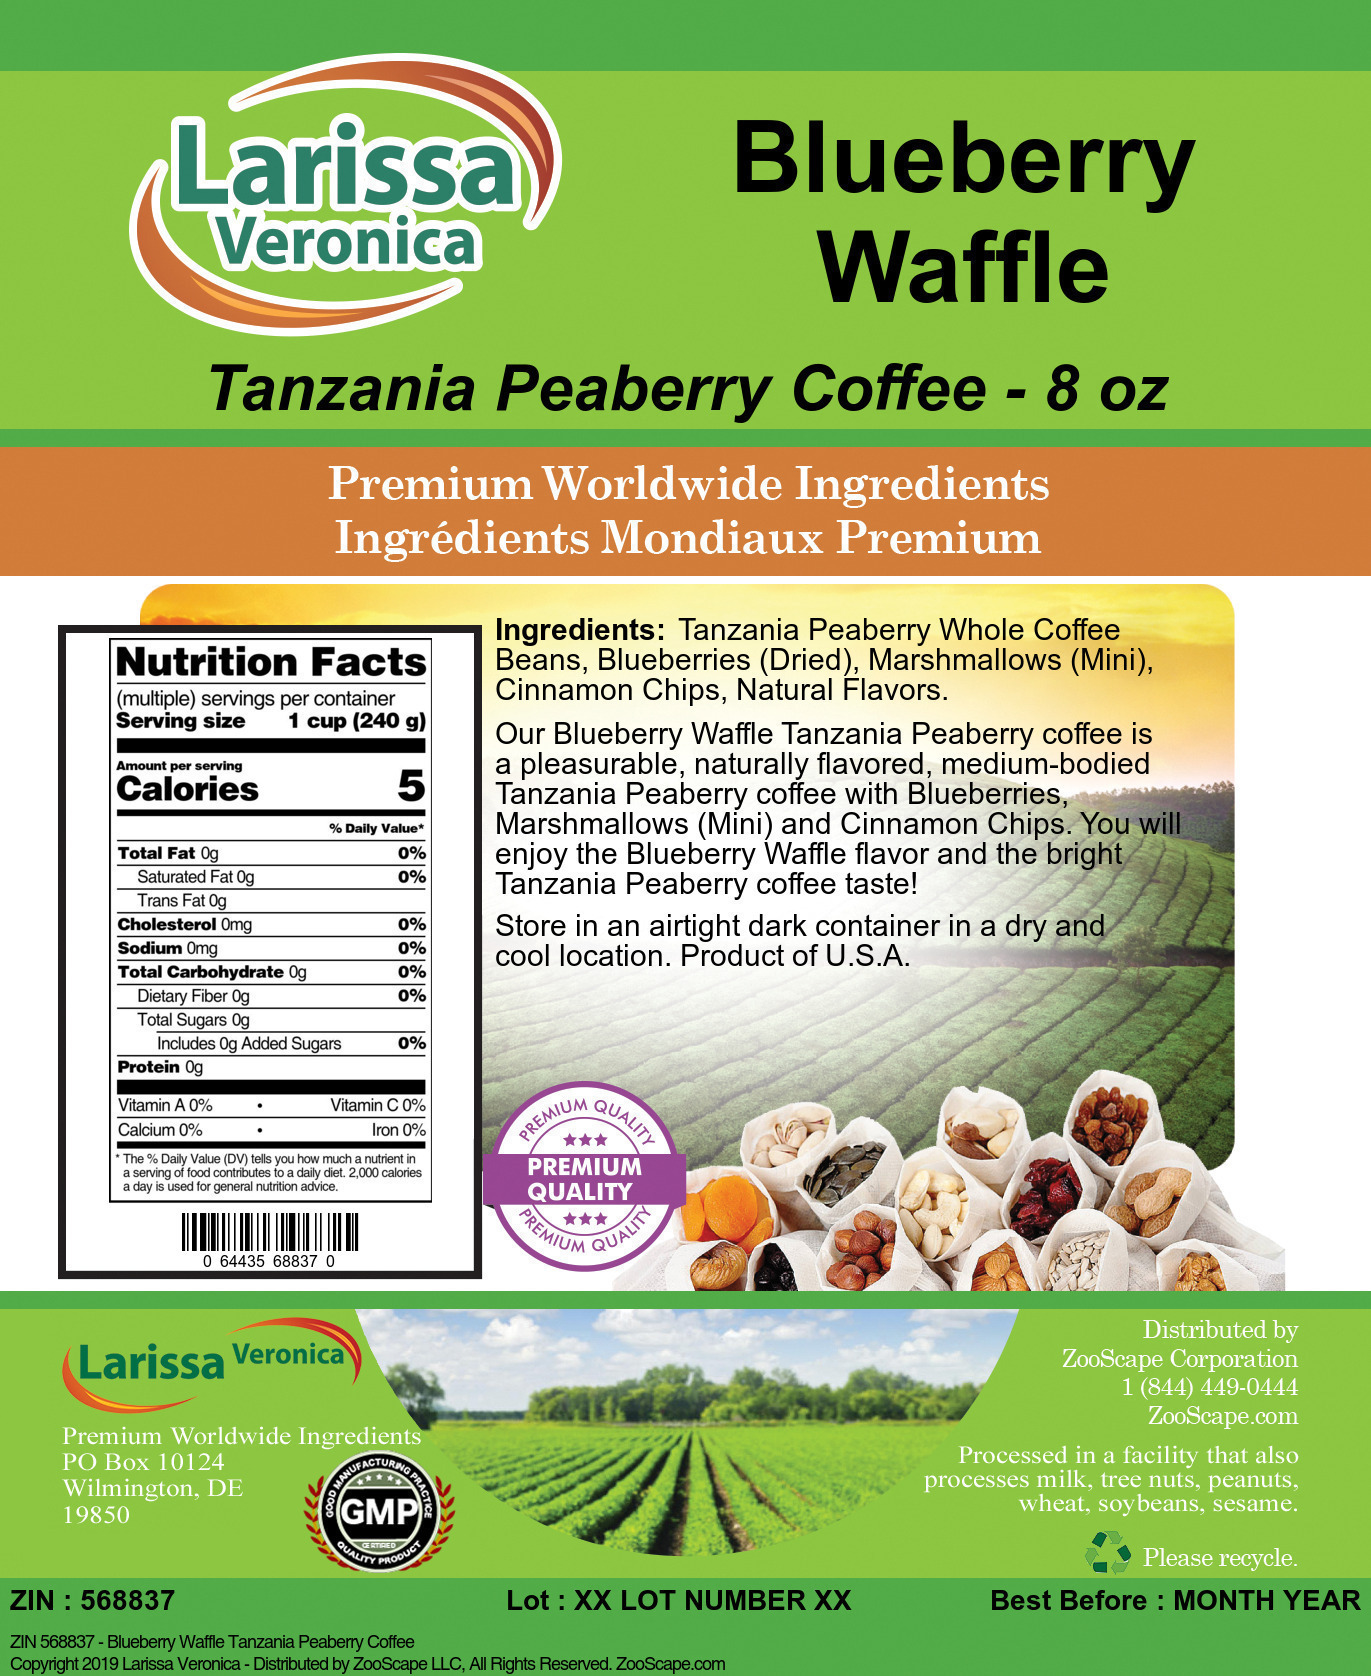 Blueberry Waffle Tanzania Peaberry Coffee - Label